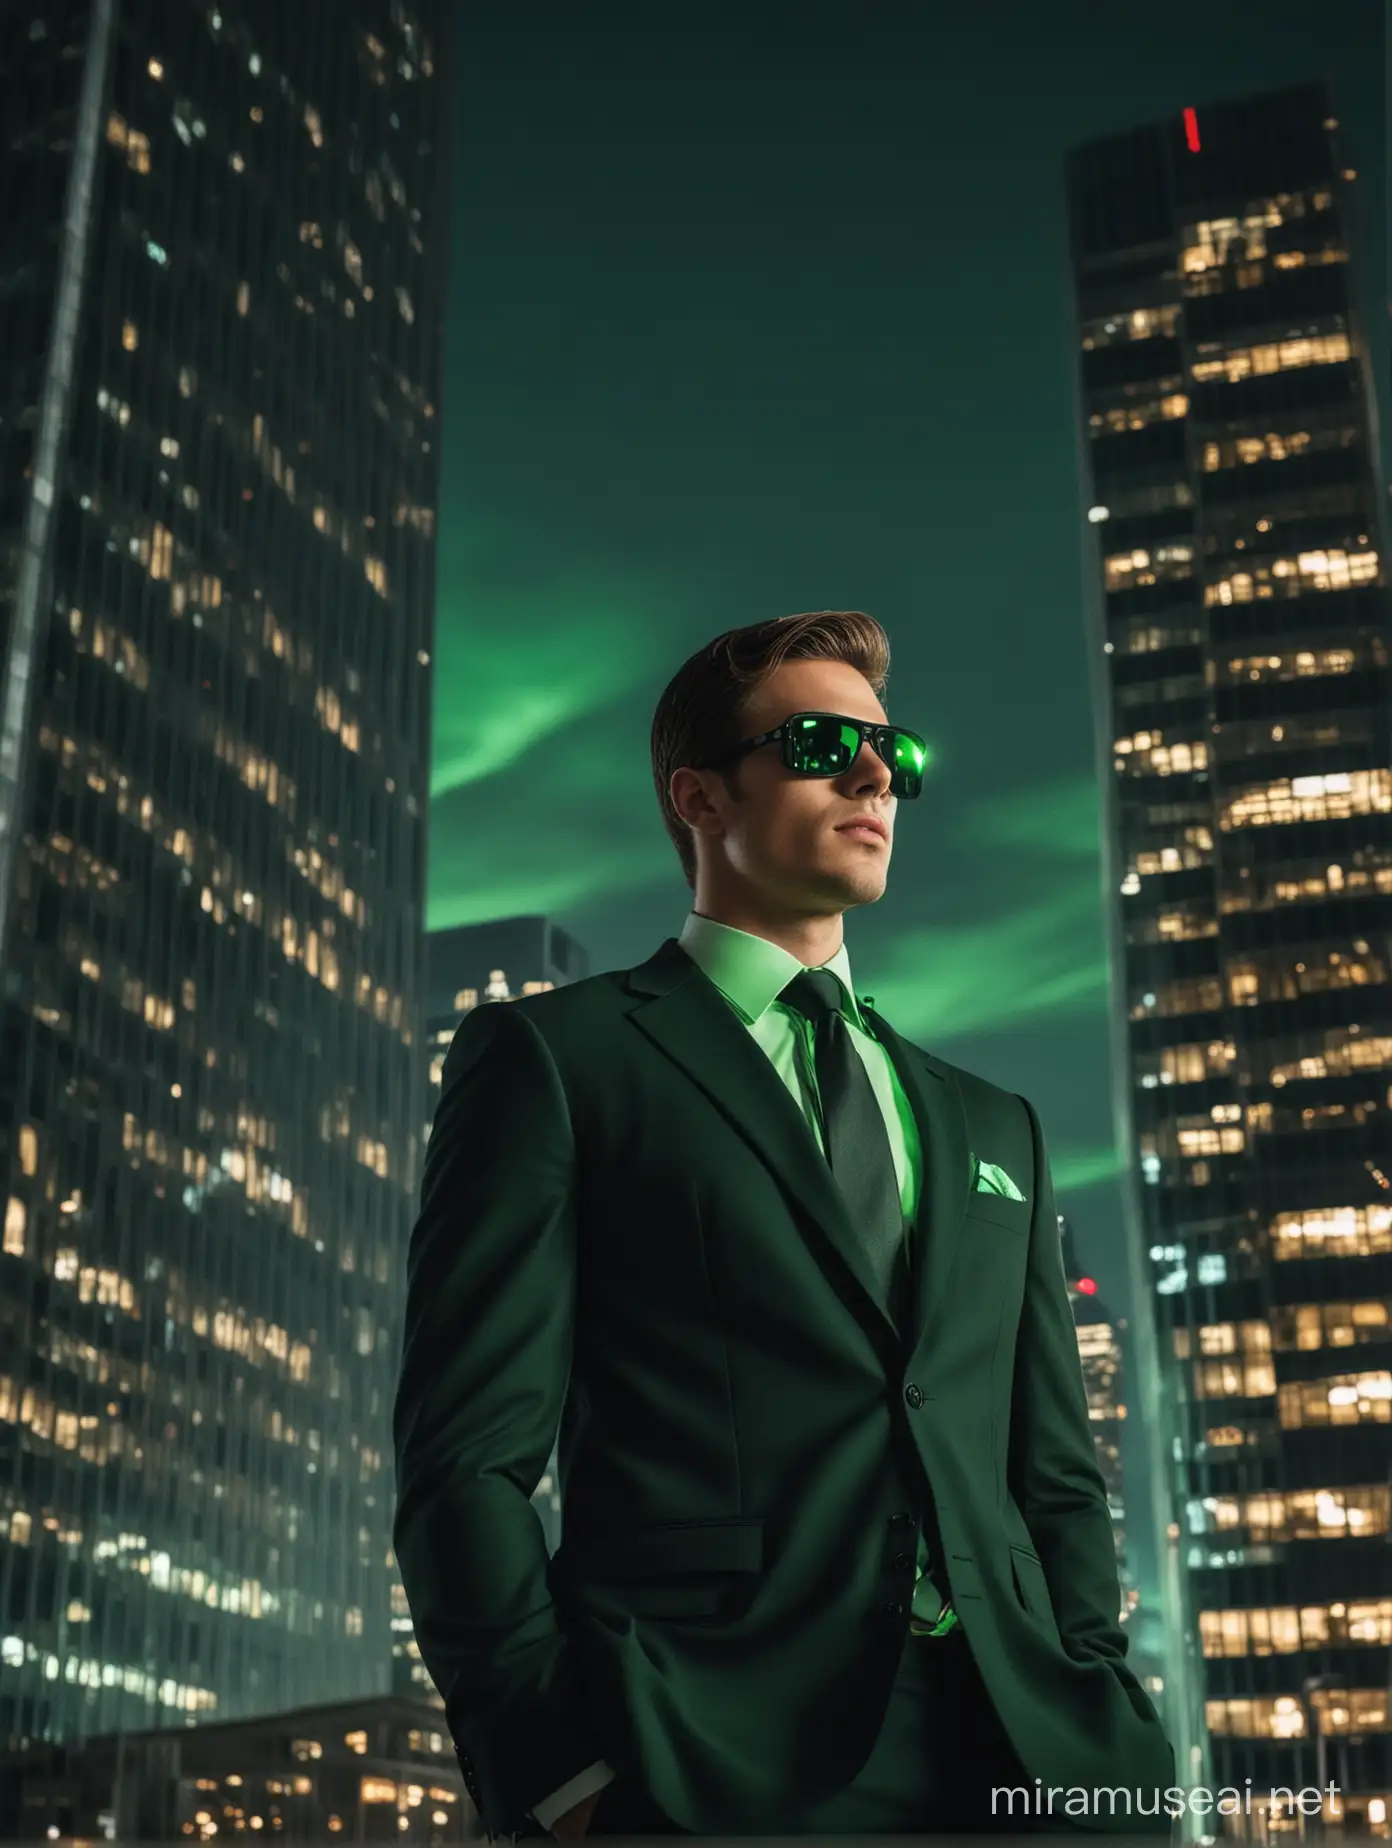 Stylish Man in Suit Amidst Illuminated Urban Skyline